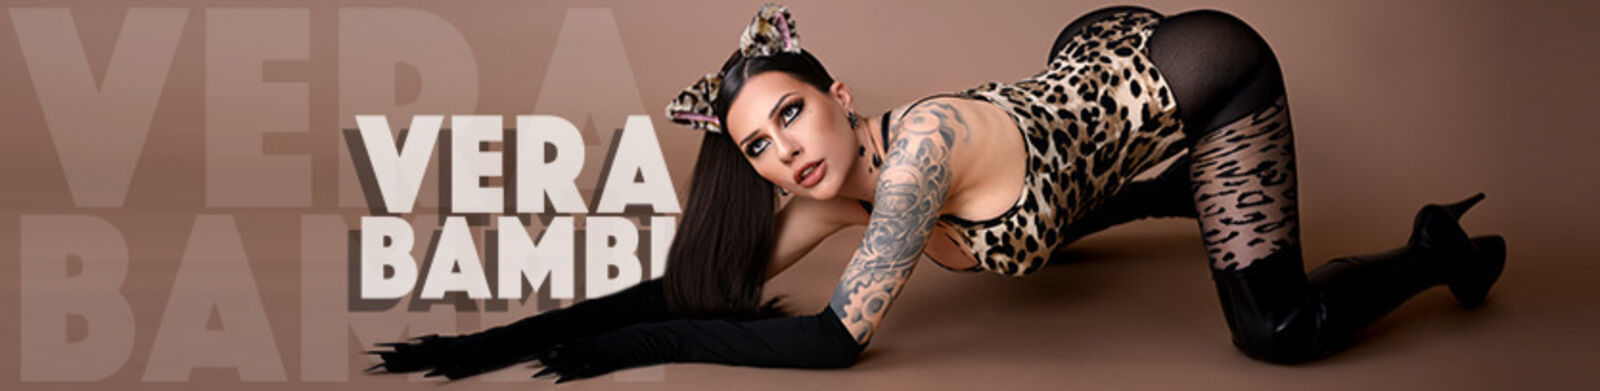 See Vera Bambi (FREE) profile